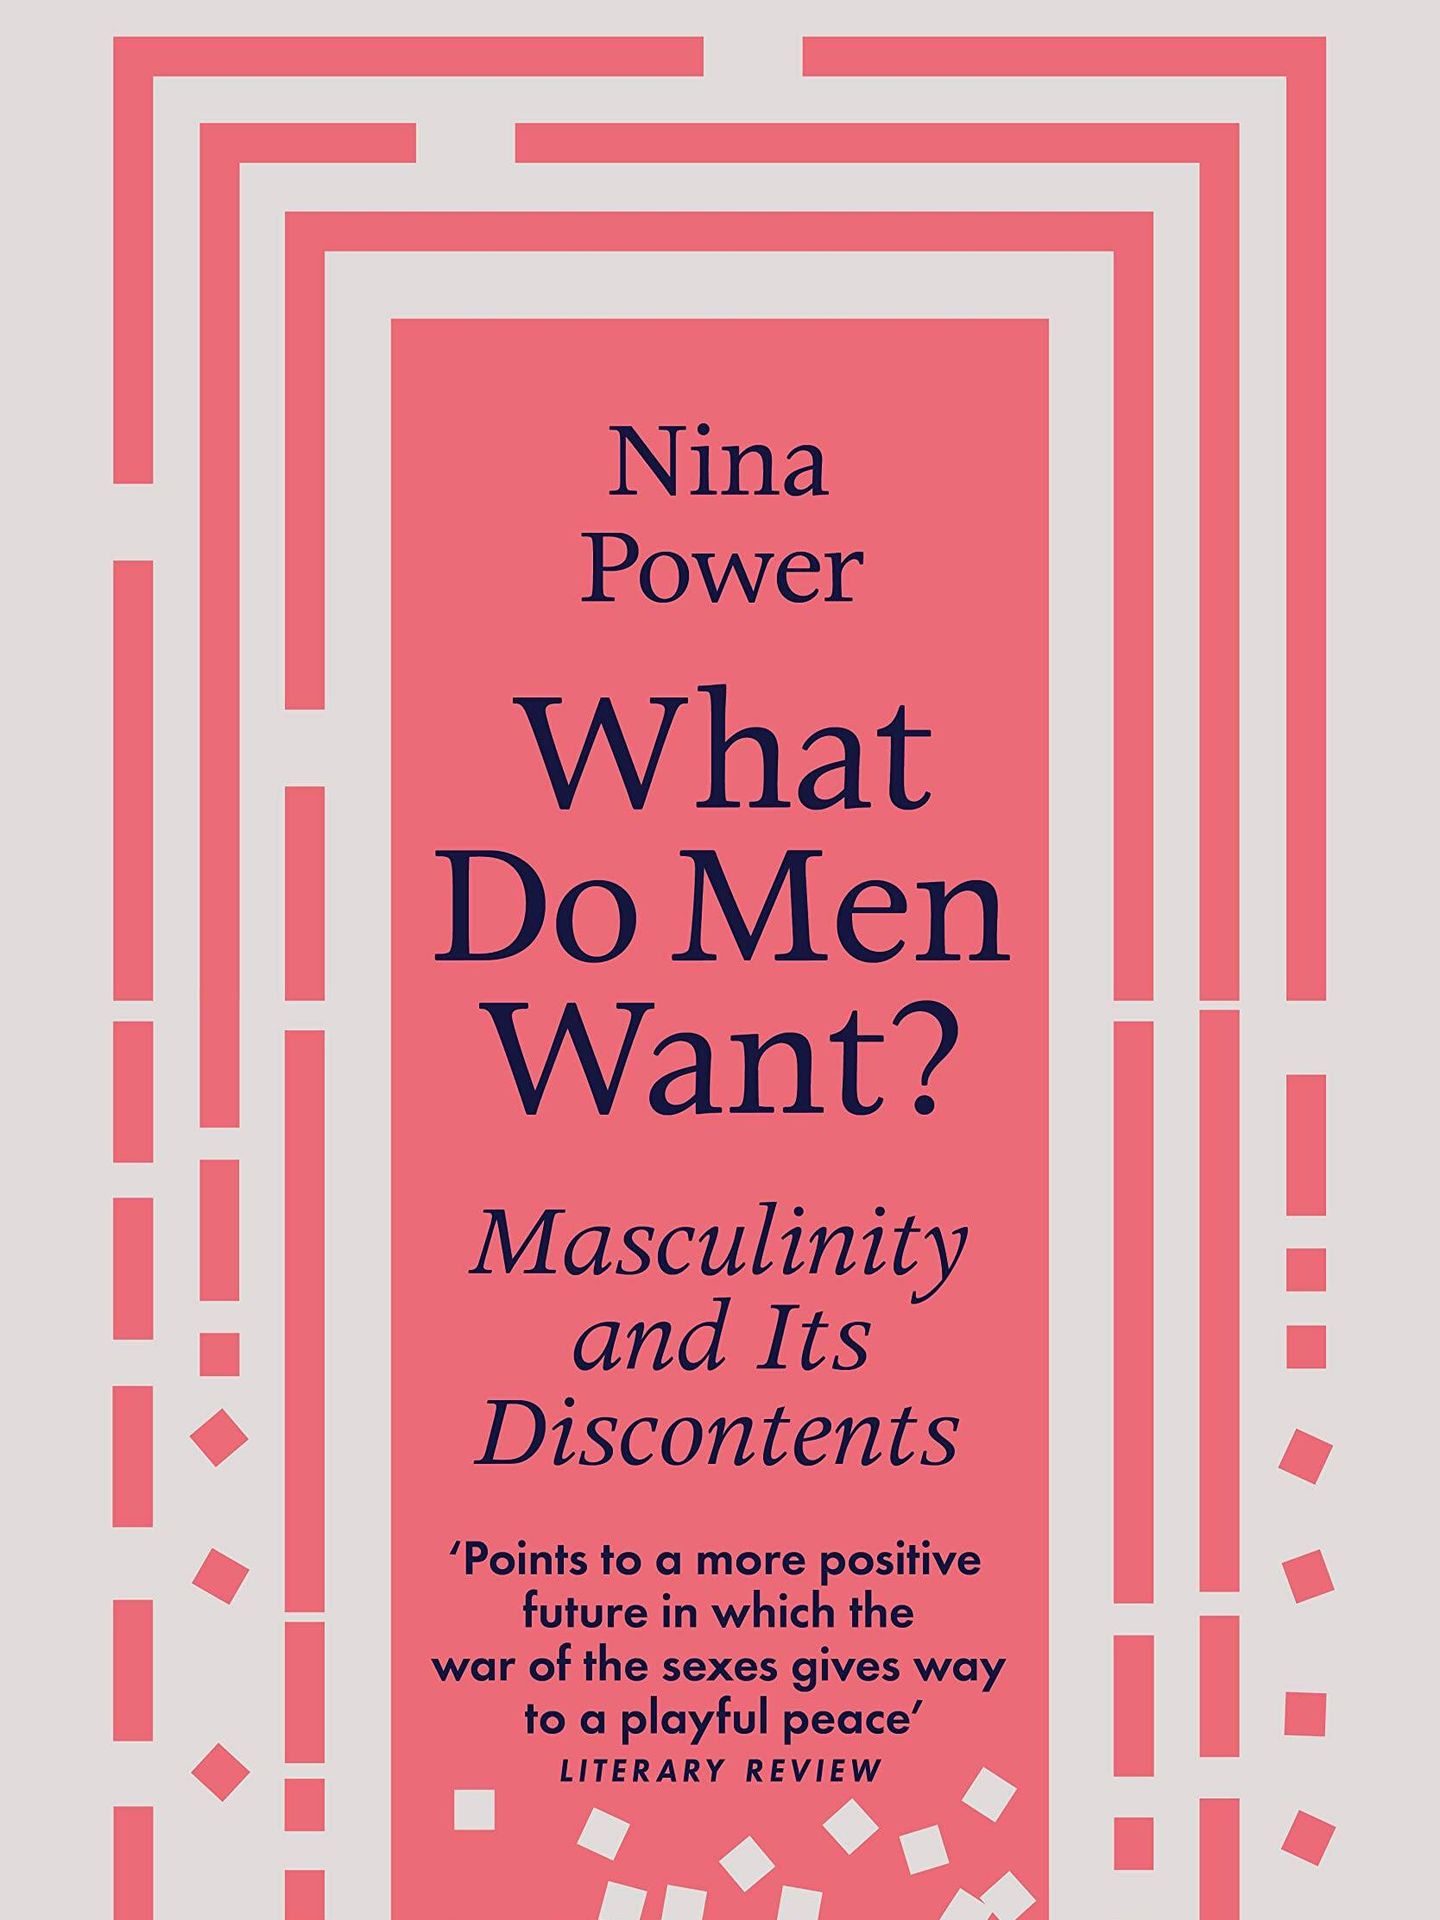 Portada de 'What do men want', de Nina Power, aún no traducido al español. 